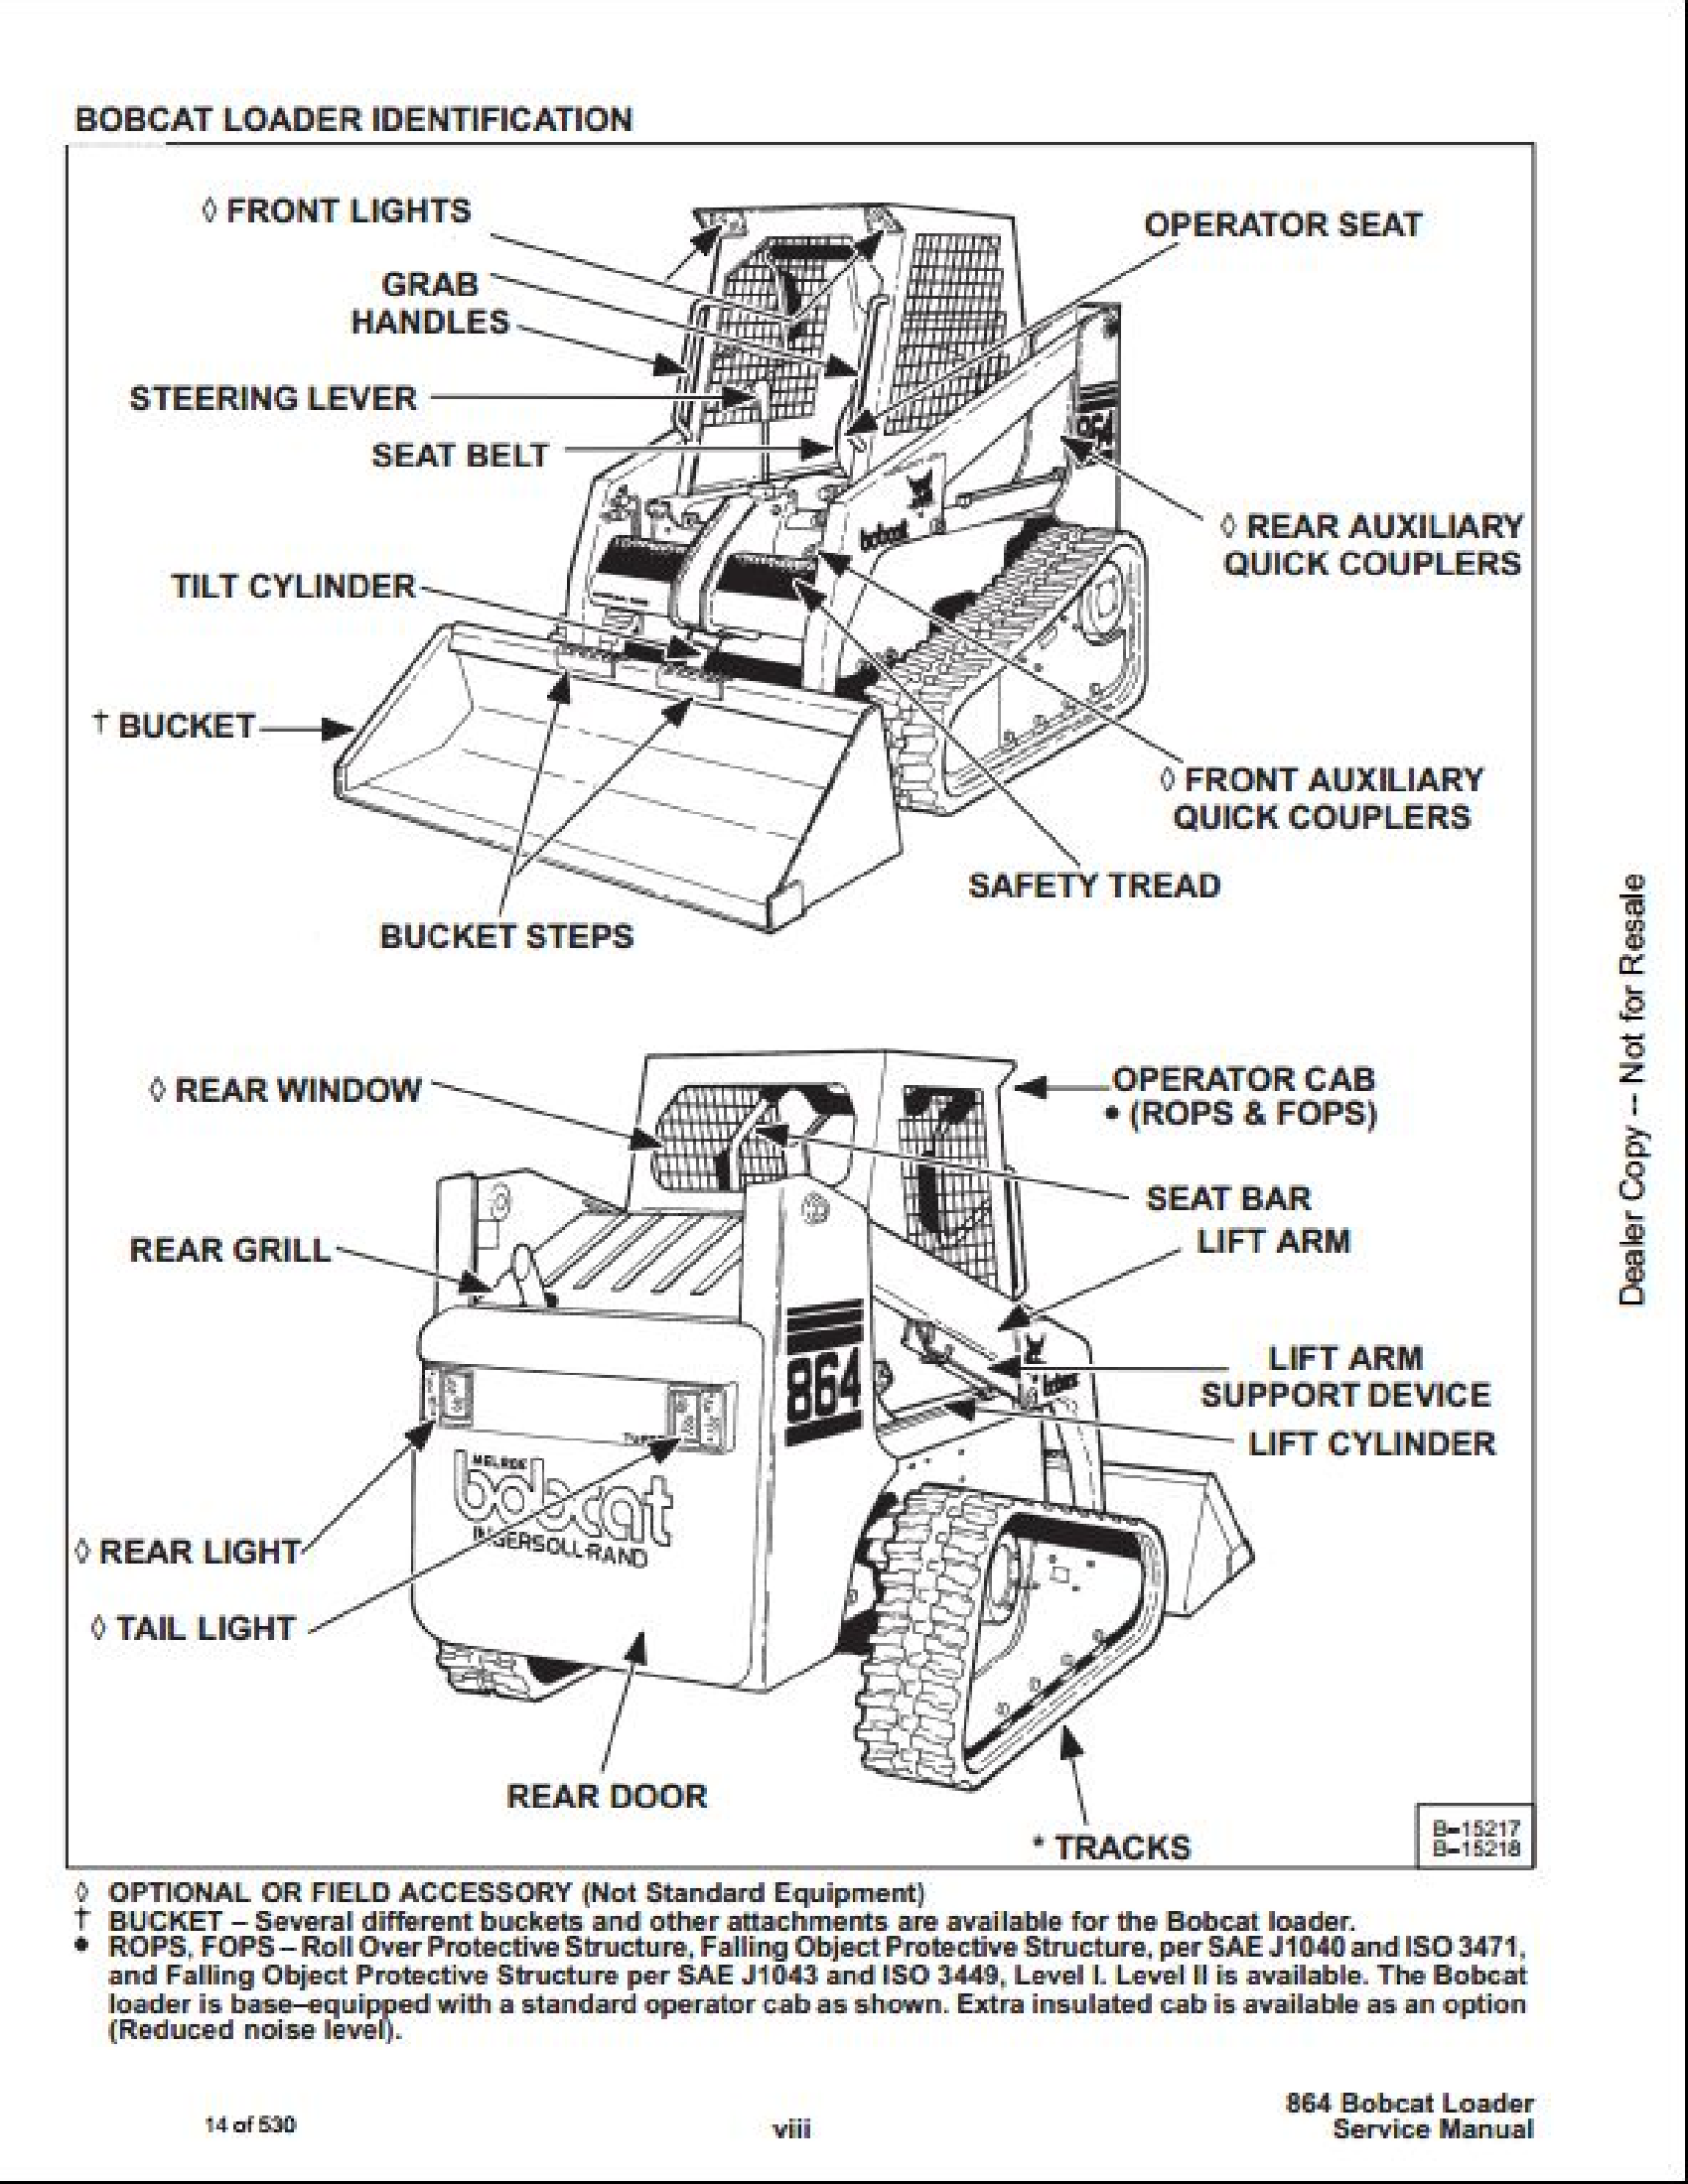 Bobcat 753 Skid Steer Loader manual